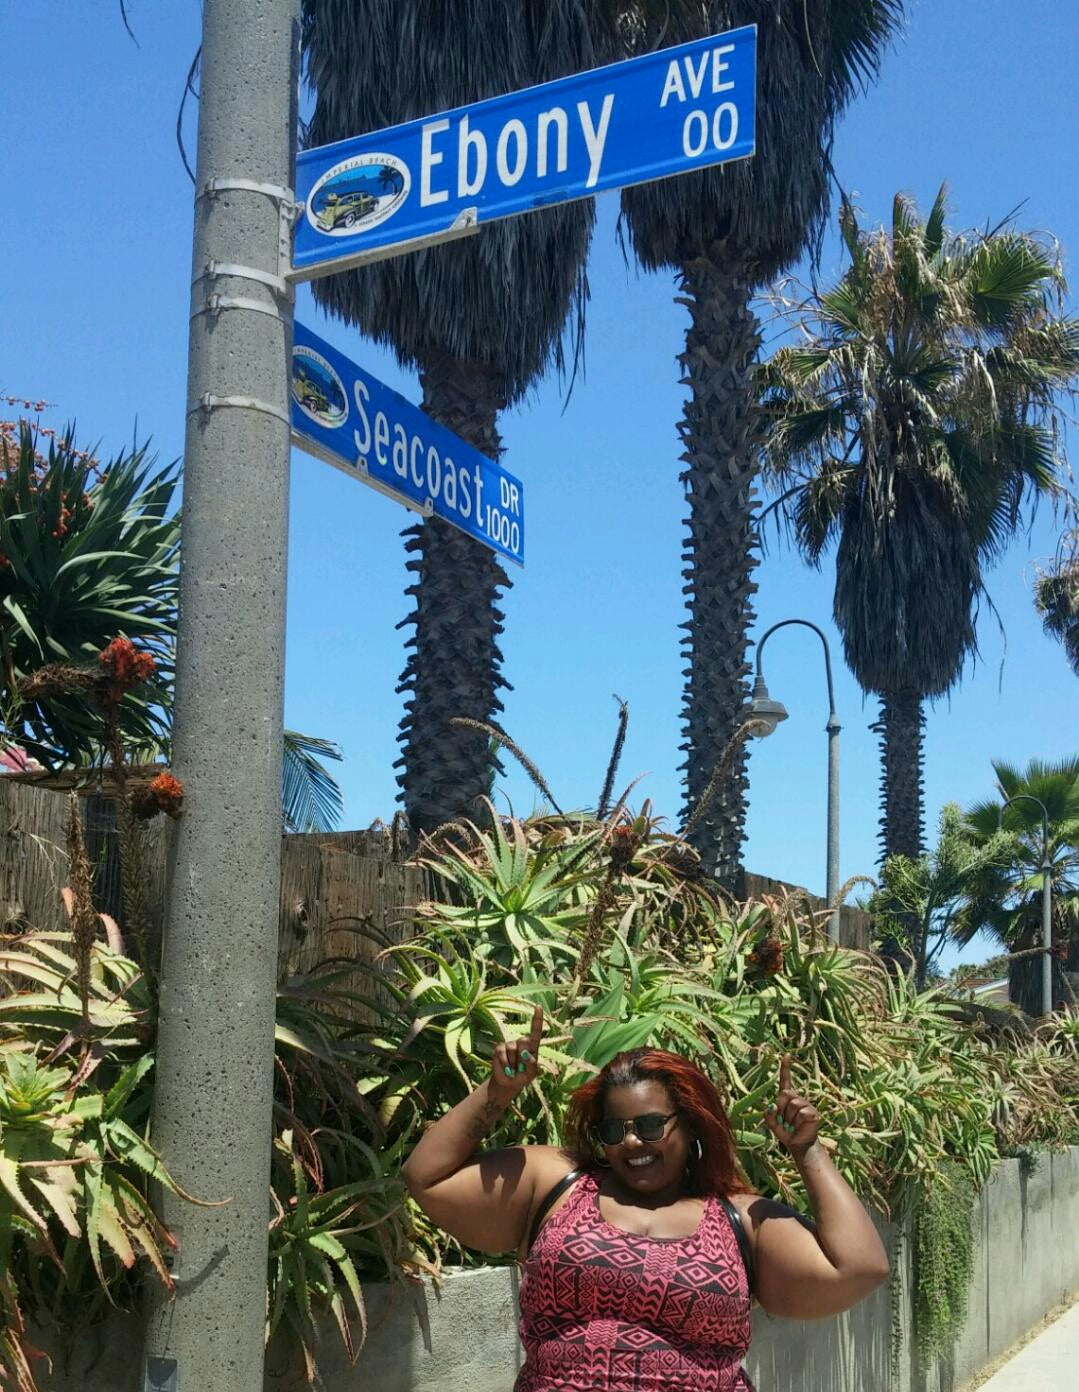 Ebony Rae Ave in Imperial Beach